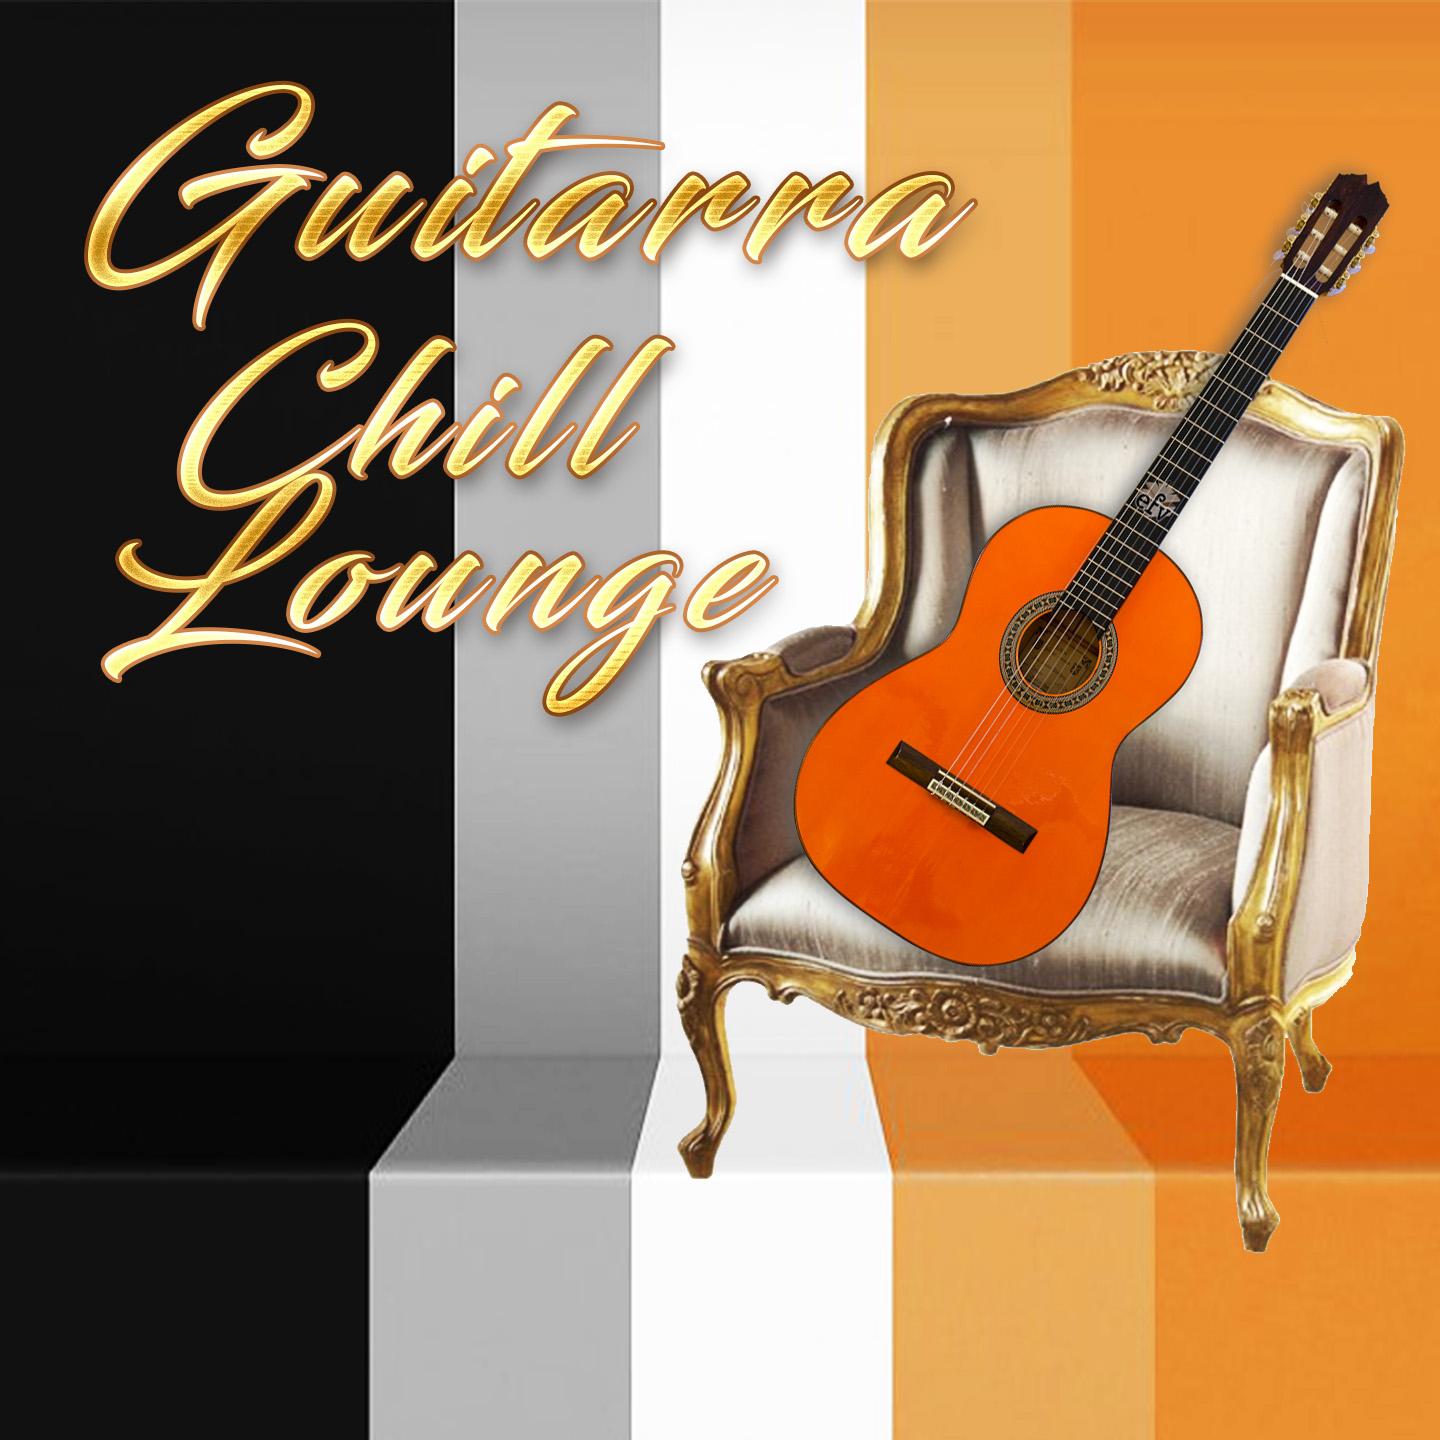 Guitarra Chill Lounge